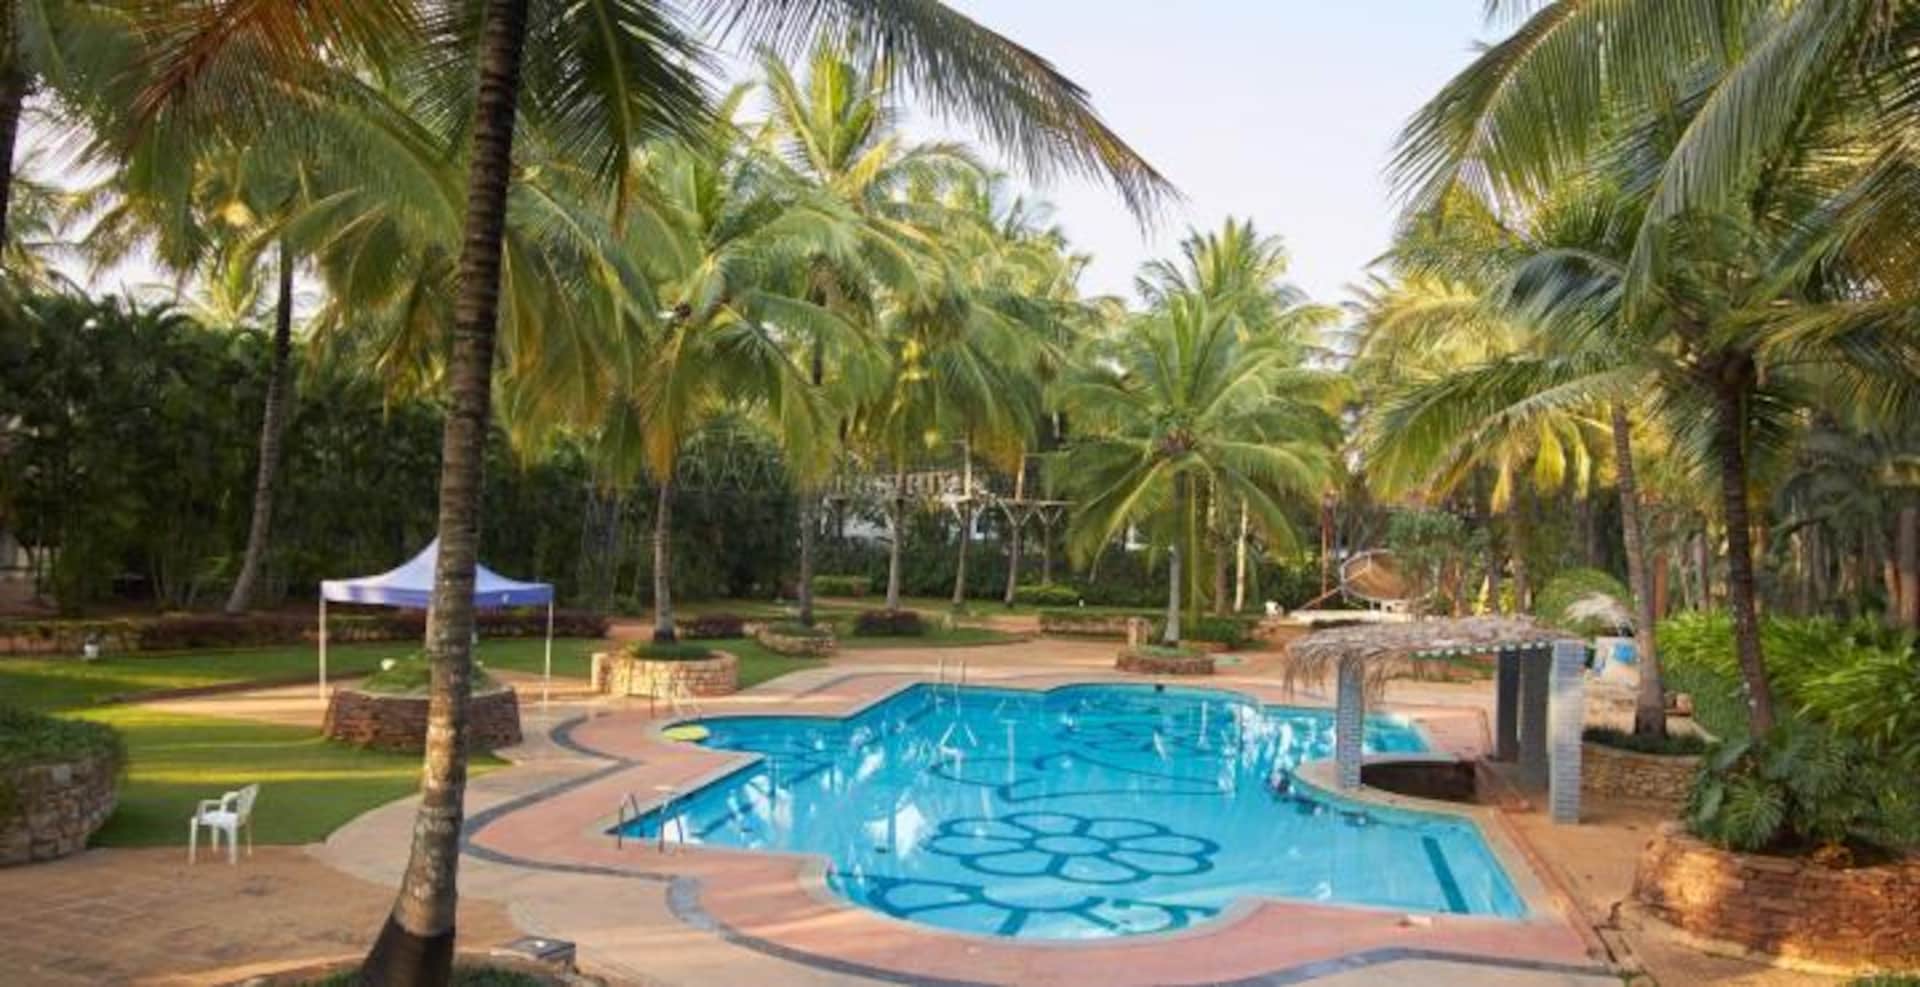 Windflower Prakruthi Resort And Spa, Book Bangalore Hotels ₹5414